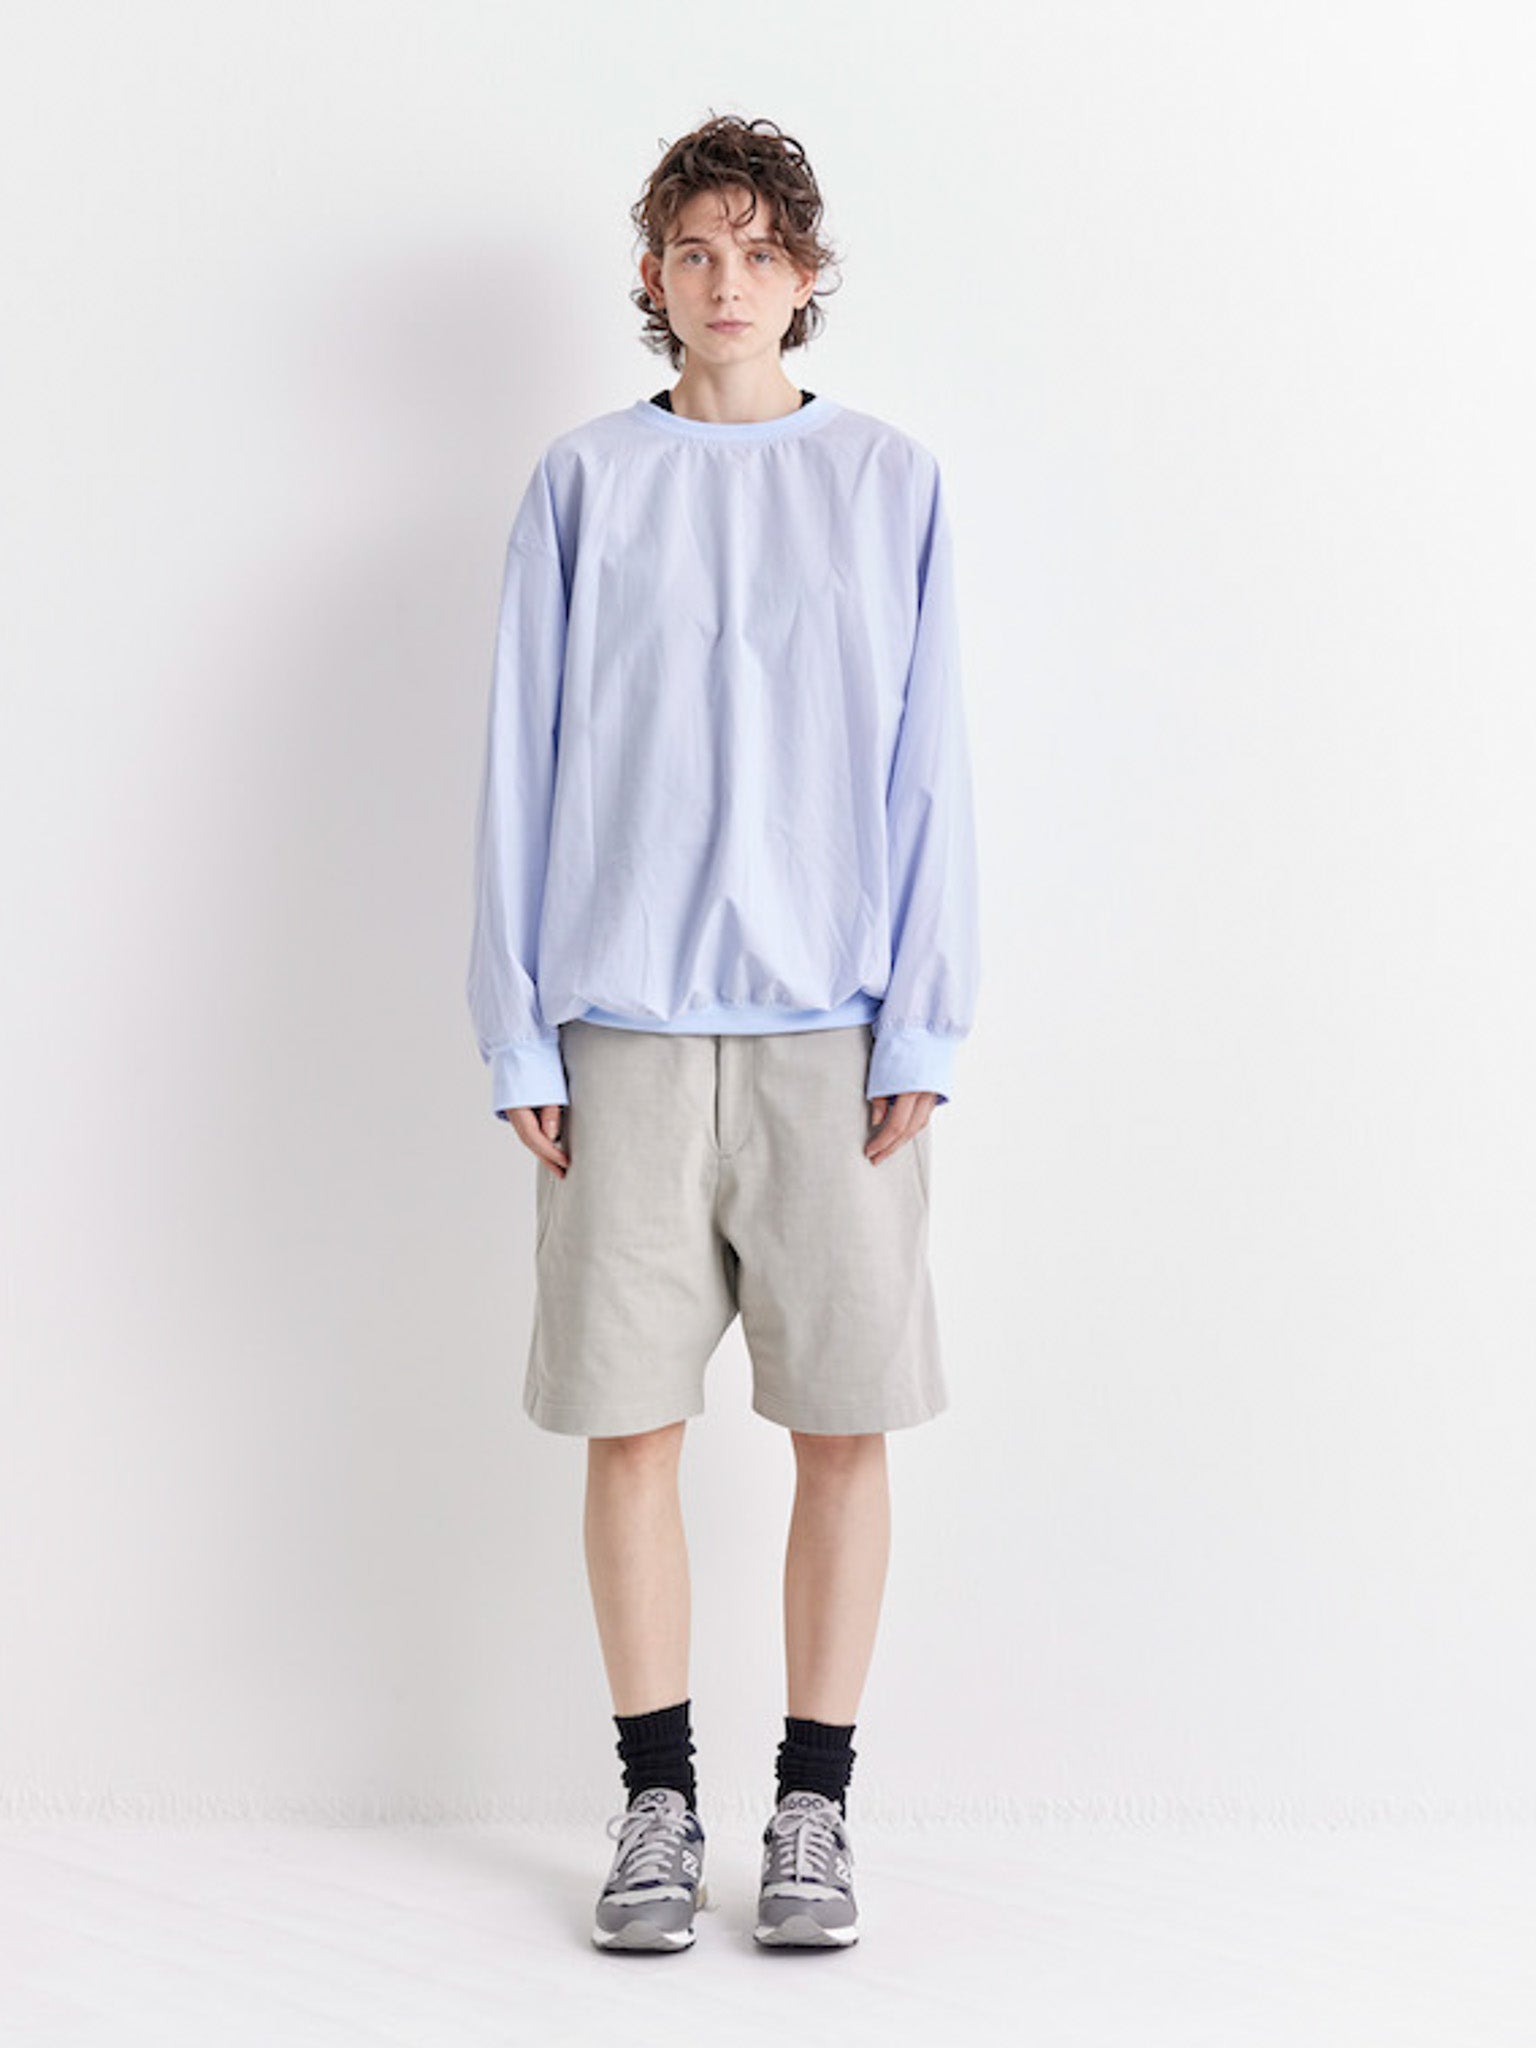 Namu Shop - Veritecoeur Pullover Shirt - Sax